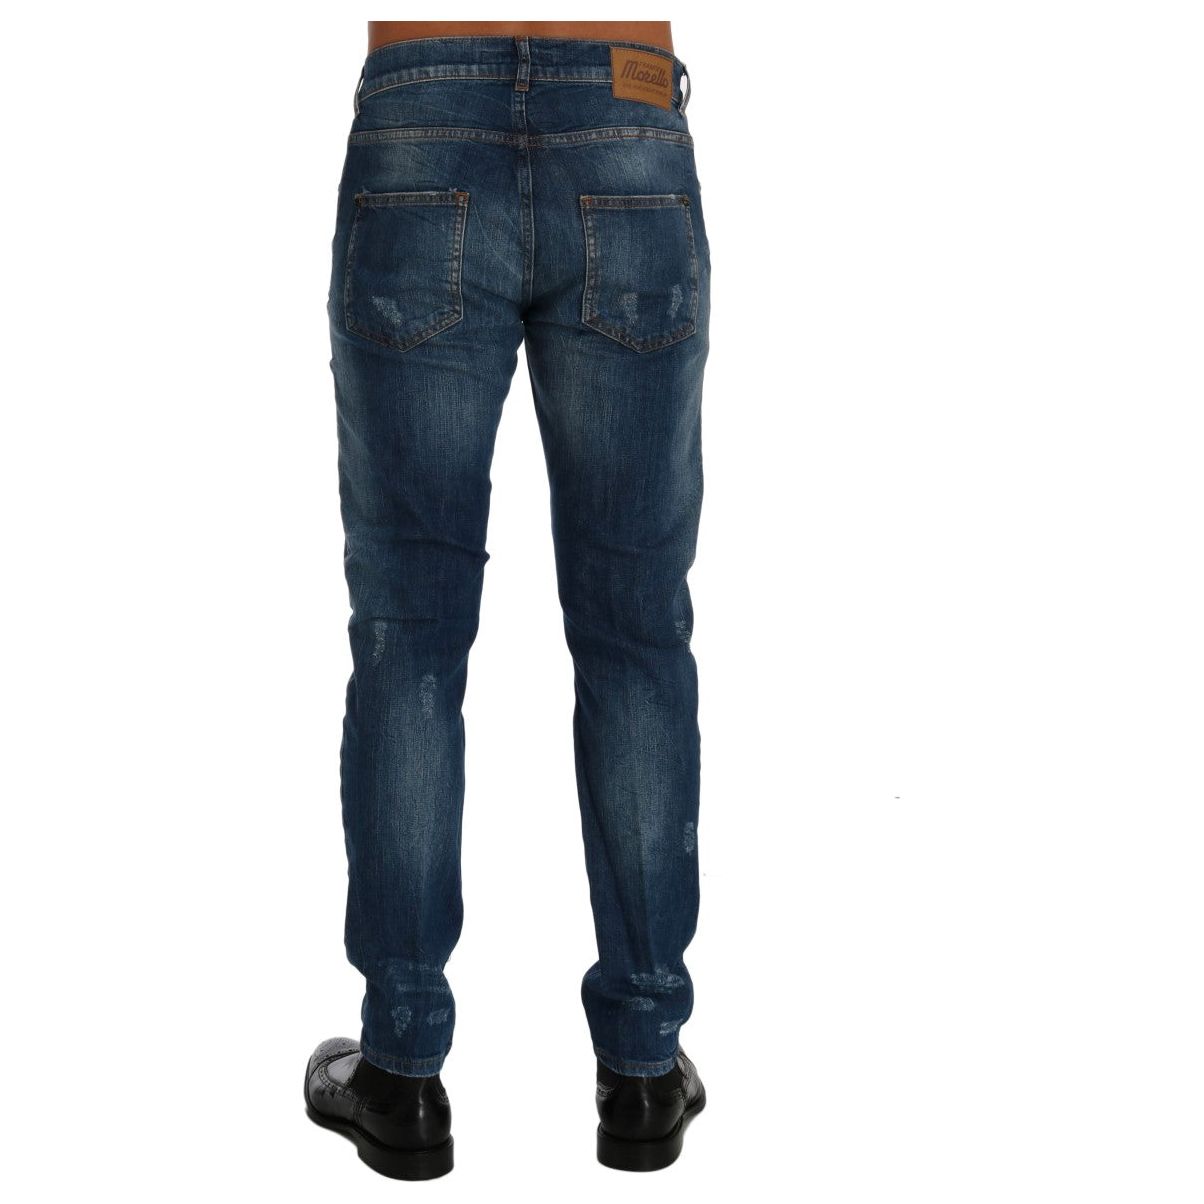 Frankie Morello Chic Slim Fit Blue Wash Jeans blue-wash-perth-slim-fit-jeans 420321-blue-wash-perth-slim-fit-jeans-2.jpg